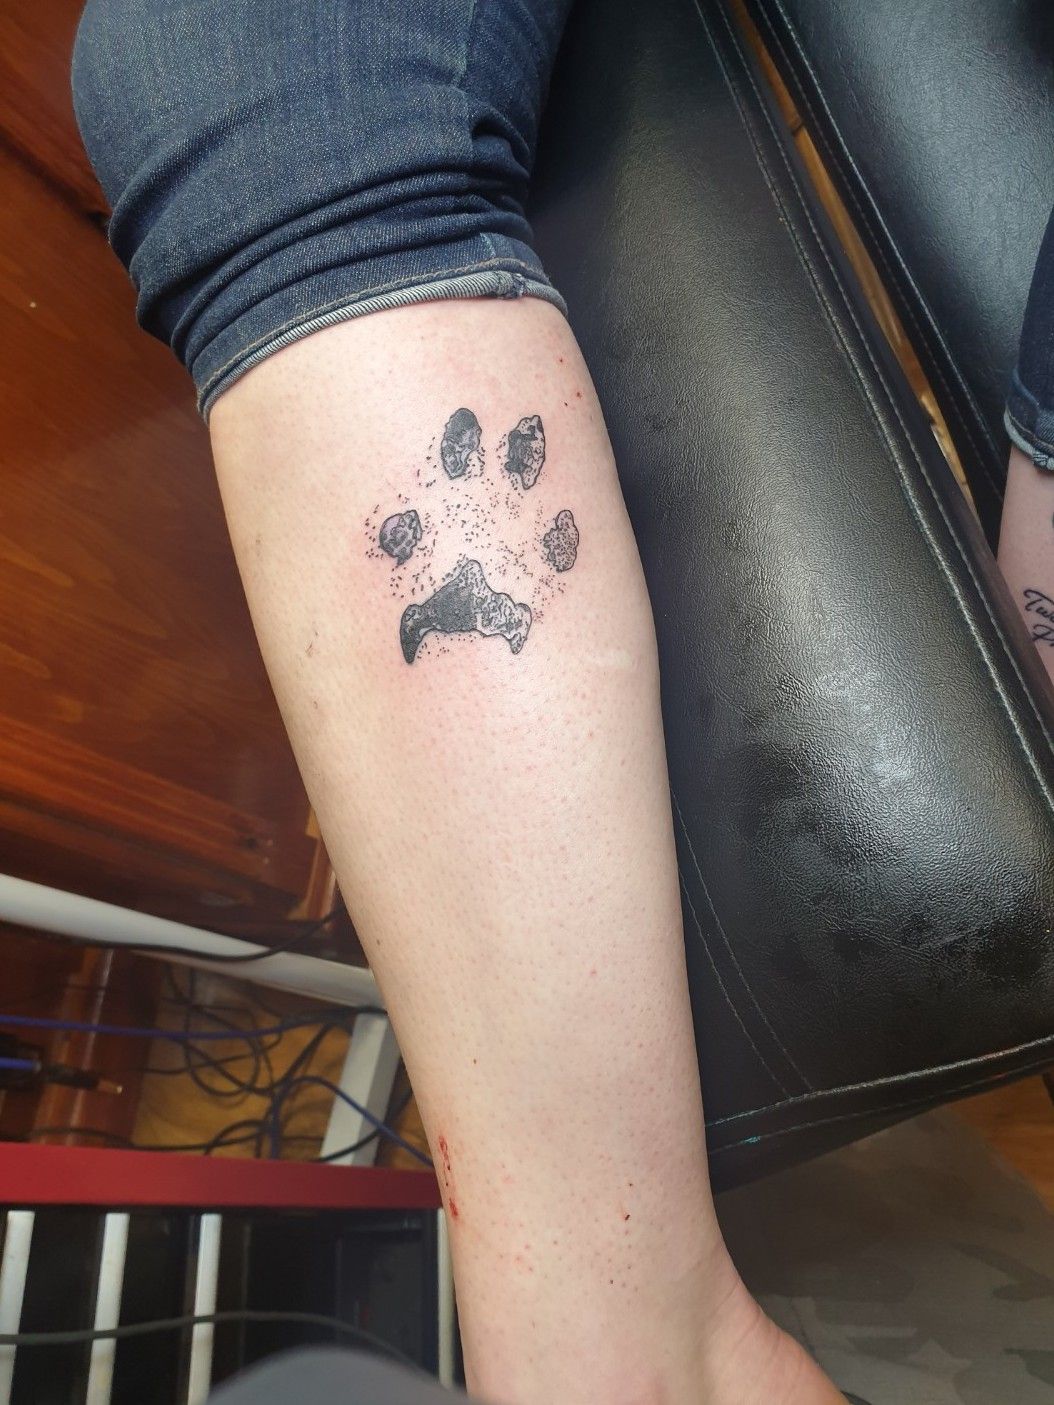 Domine Tattoo  doglover dogtattoo dog tattoo tattoos  Facebook